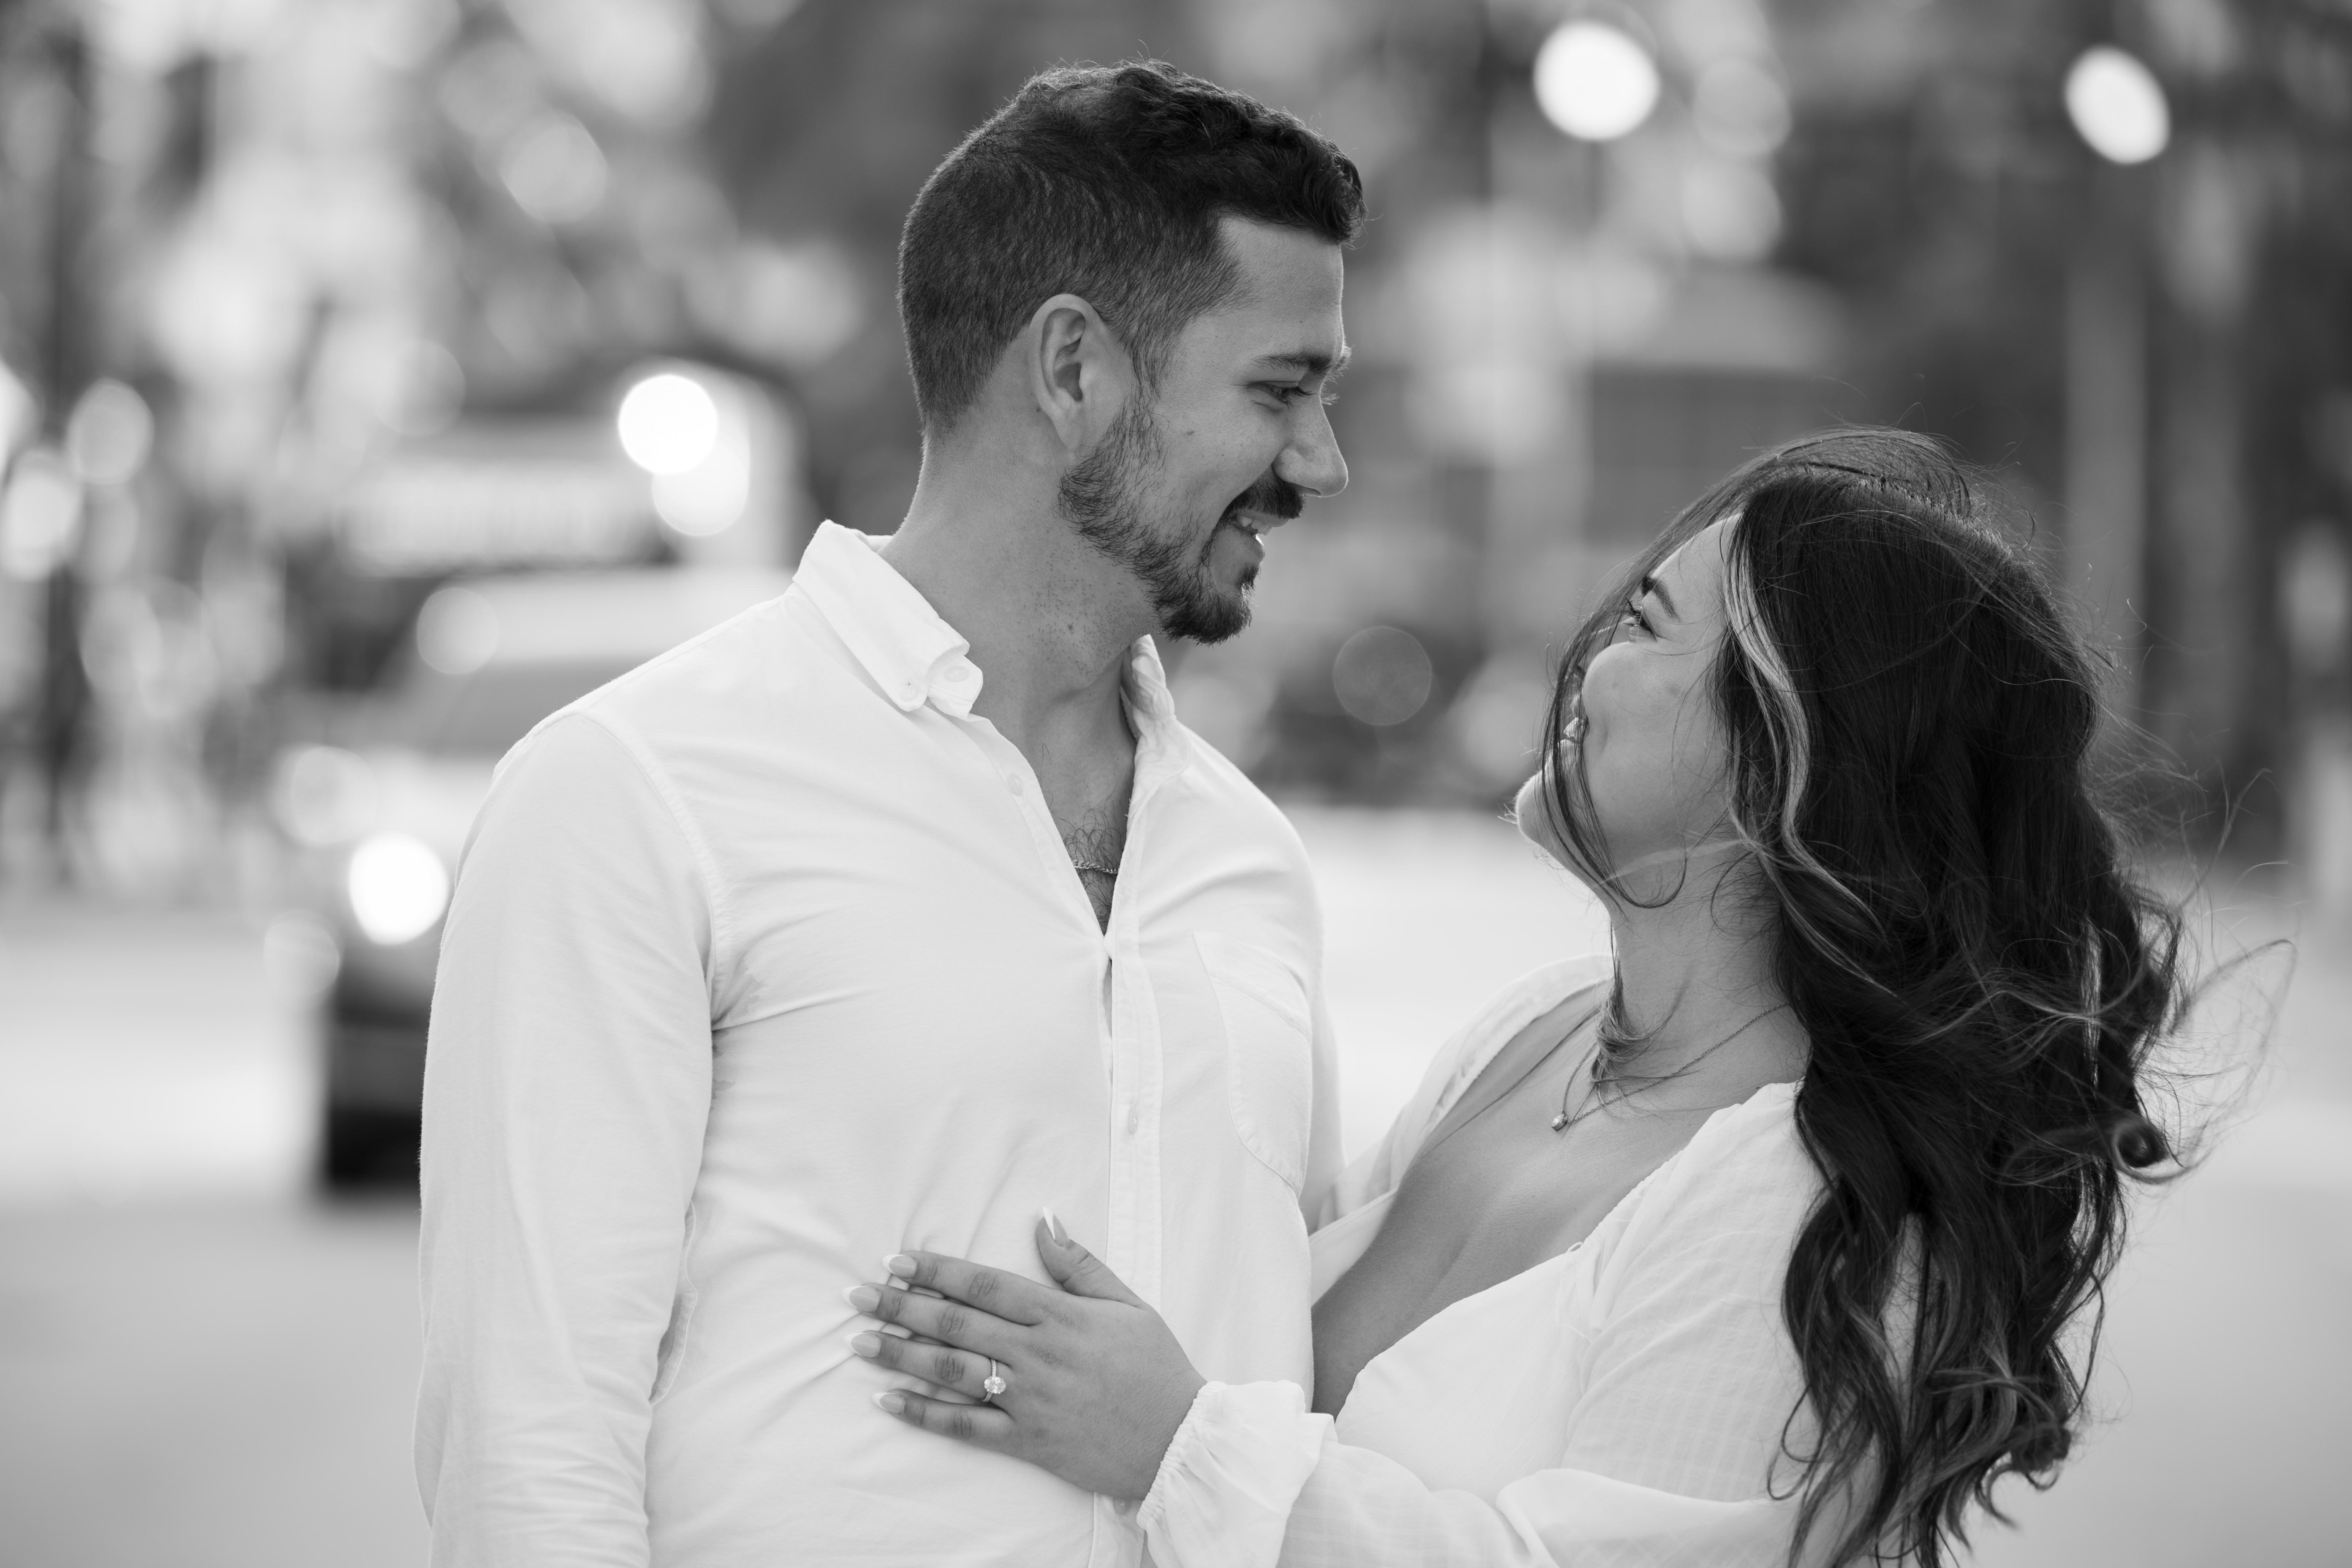 The Wedding Website of Lexi Ocasio and Jared Dovidio